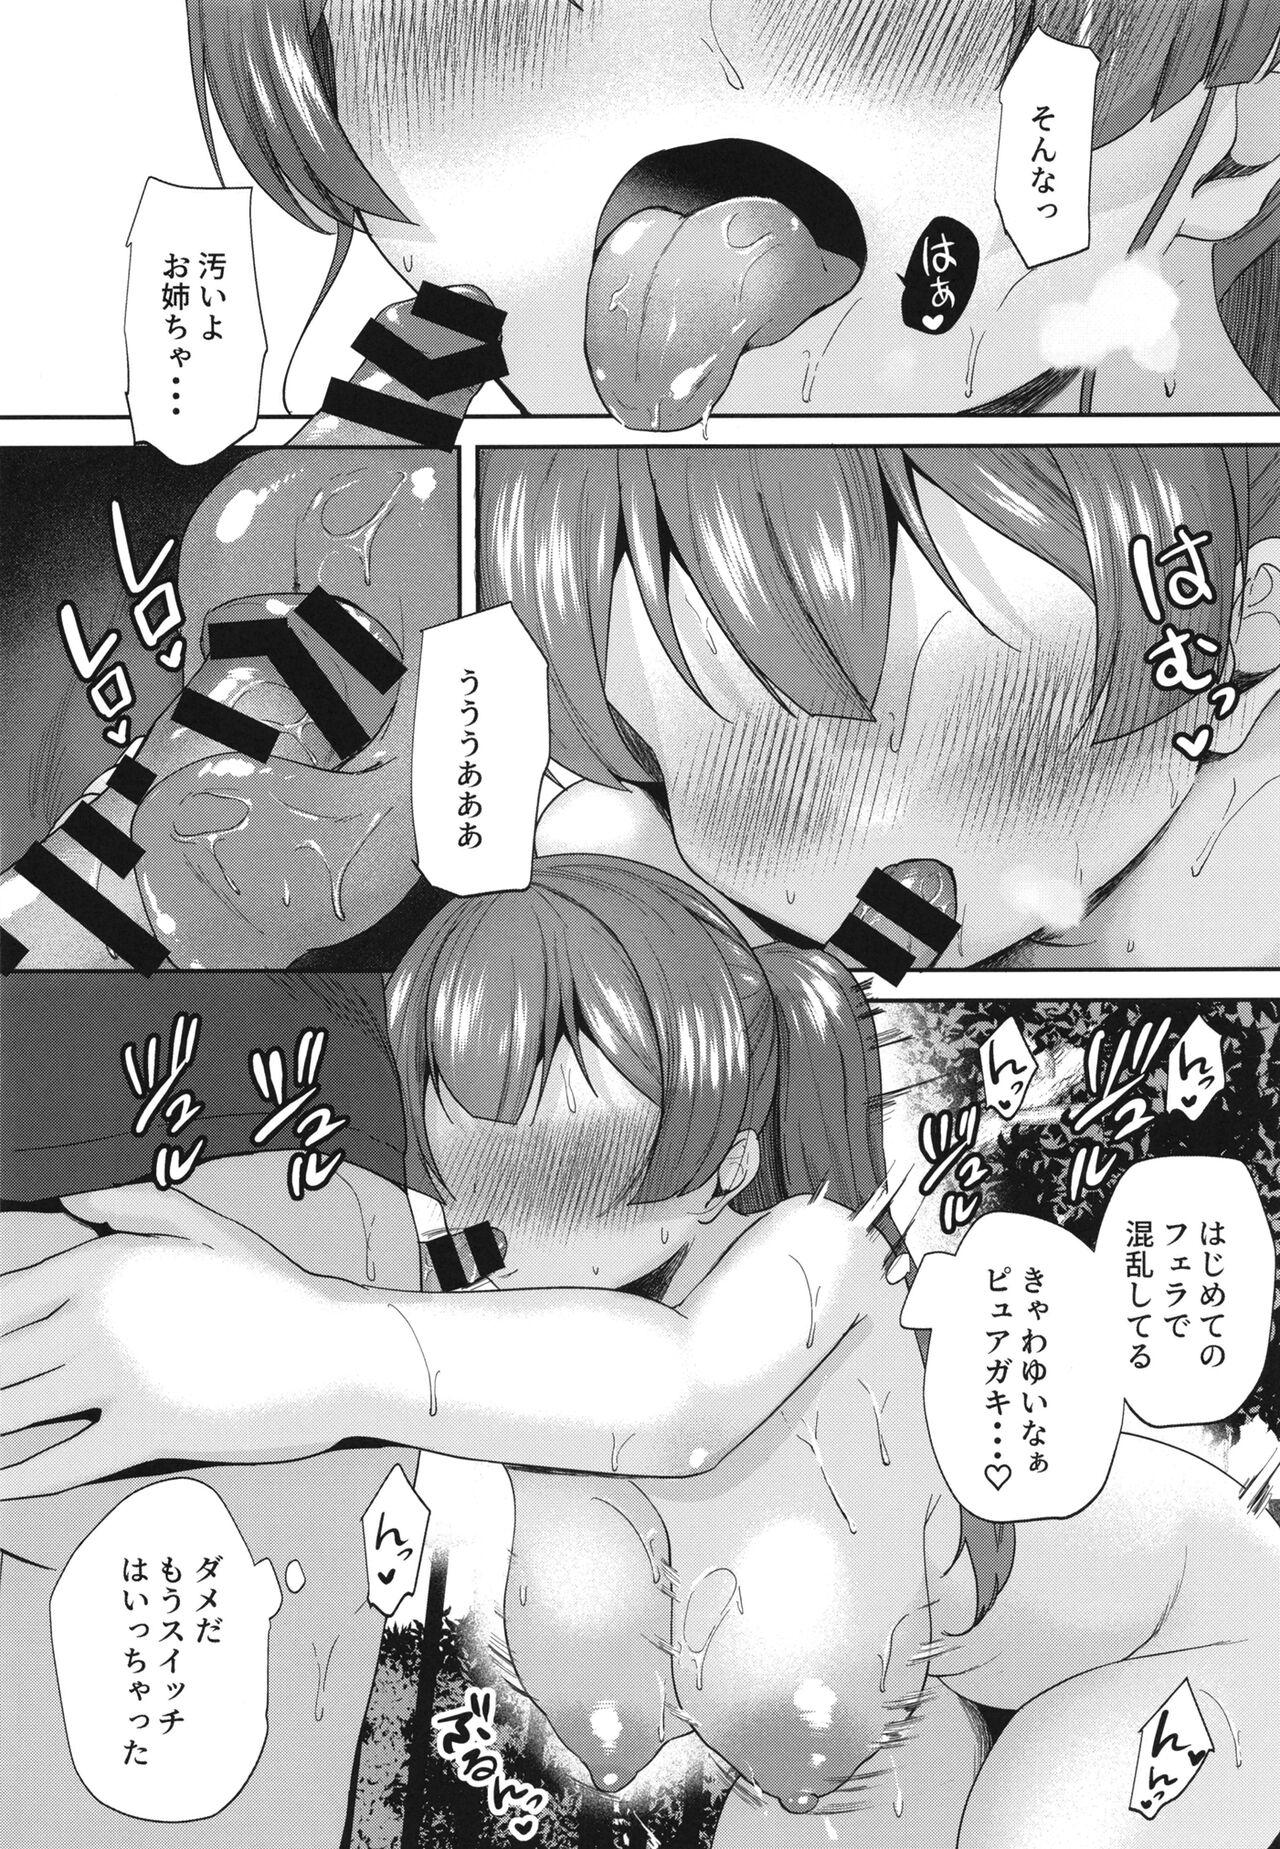 Senchou no Ecchi Manga 13